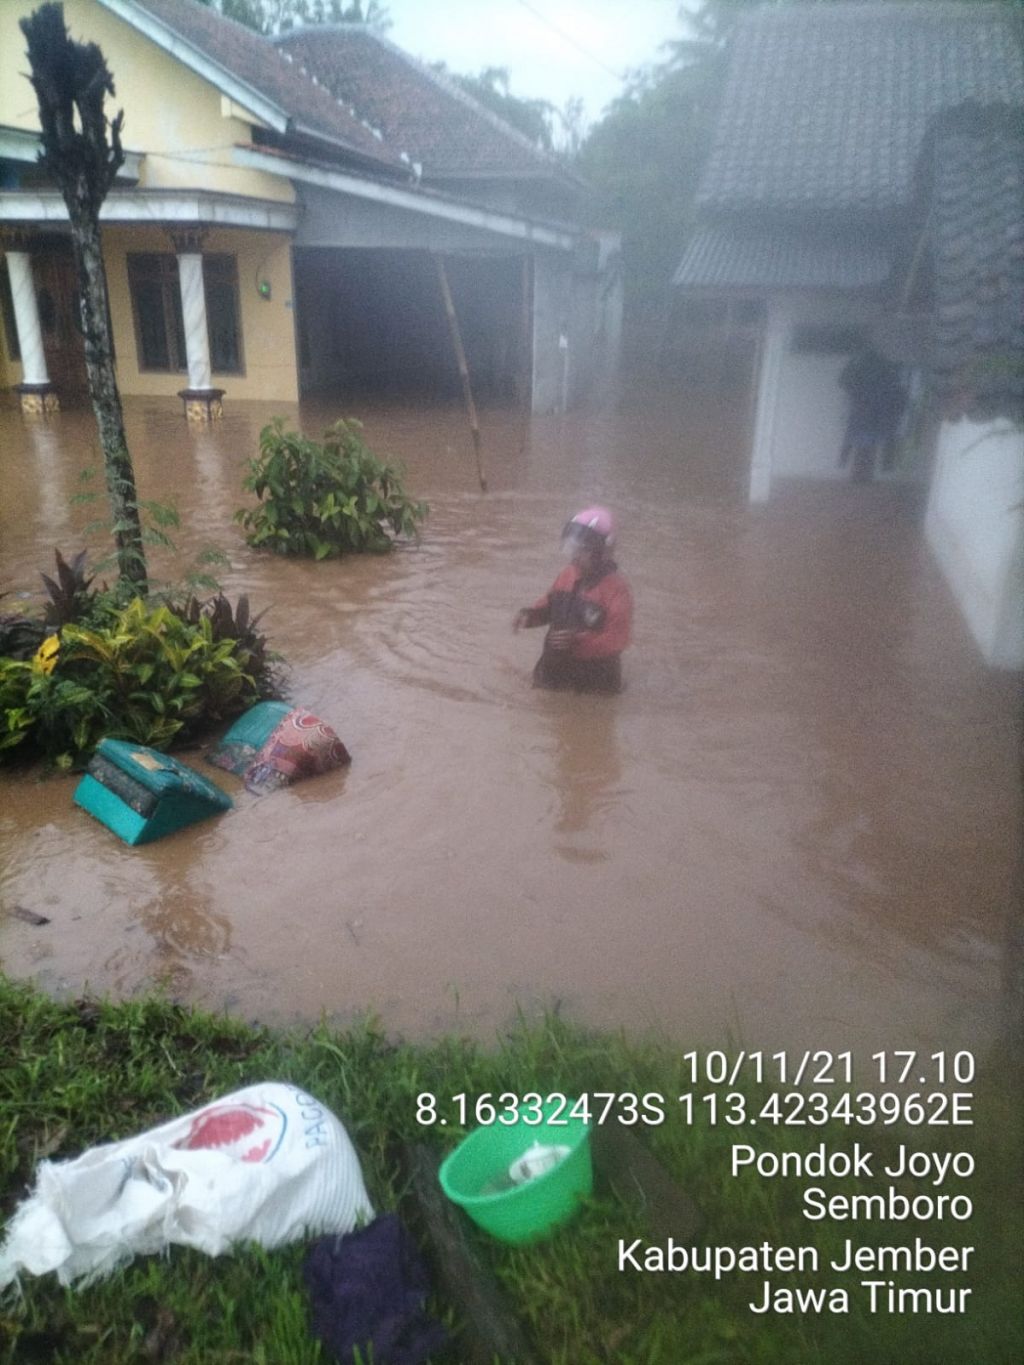 Seorang warga mencoba menyelamatkan diri dari kepungan banjir.